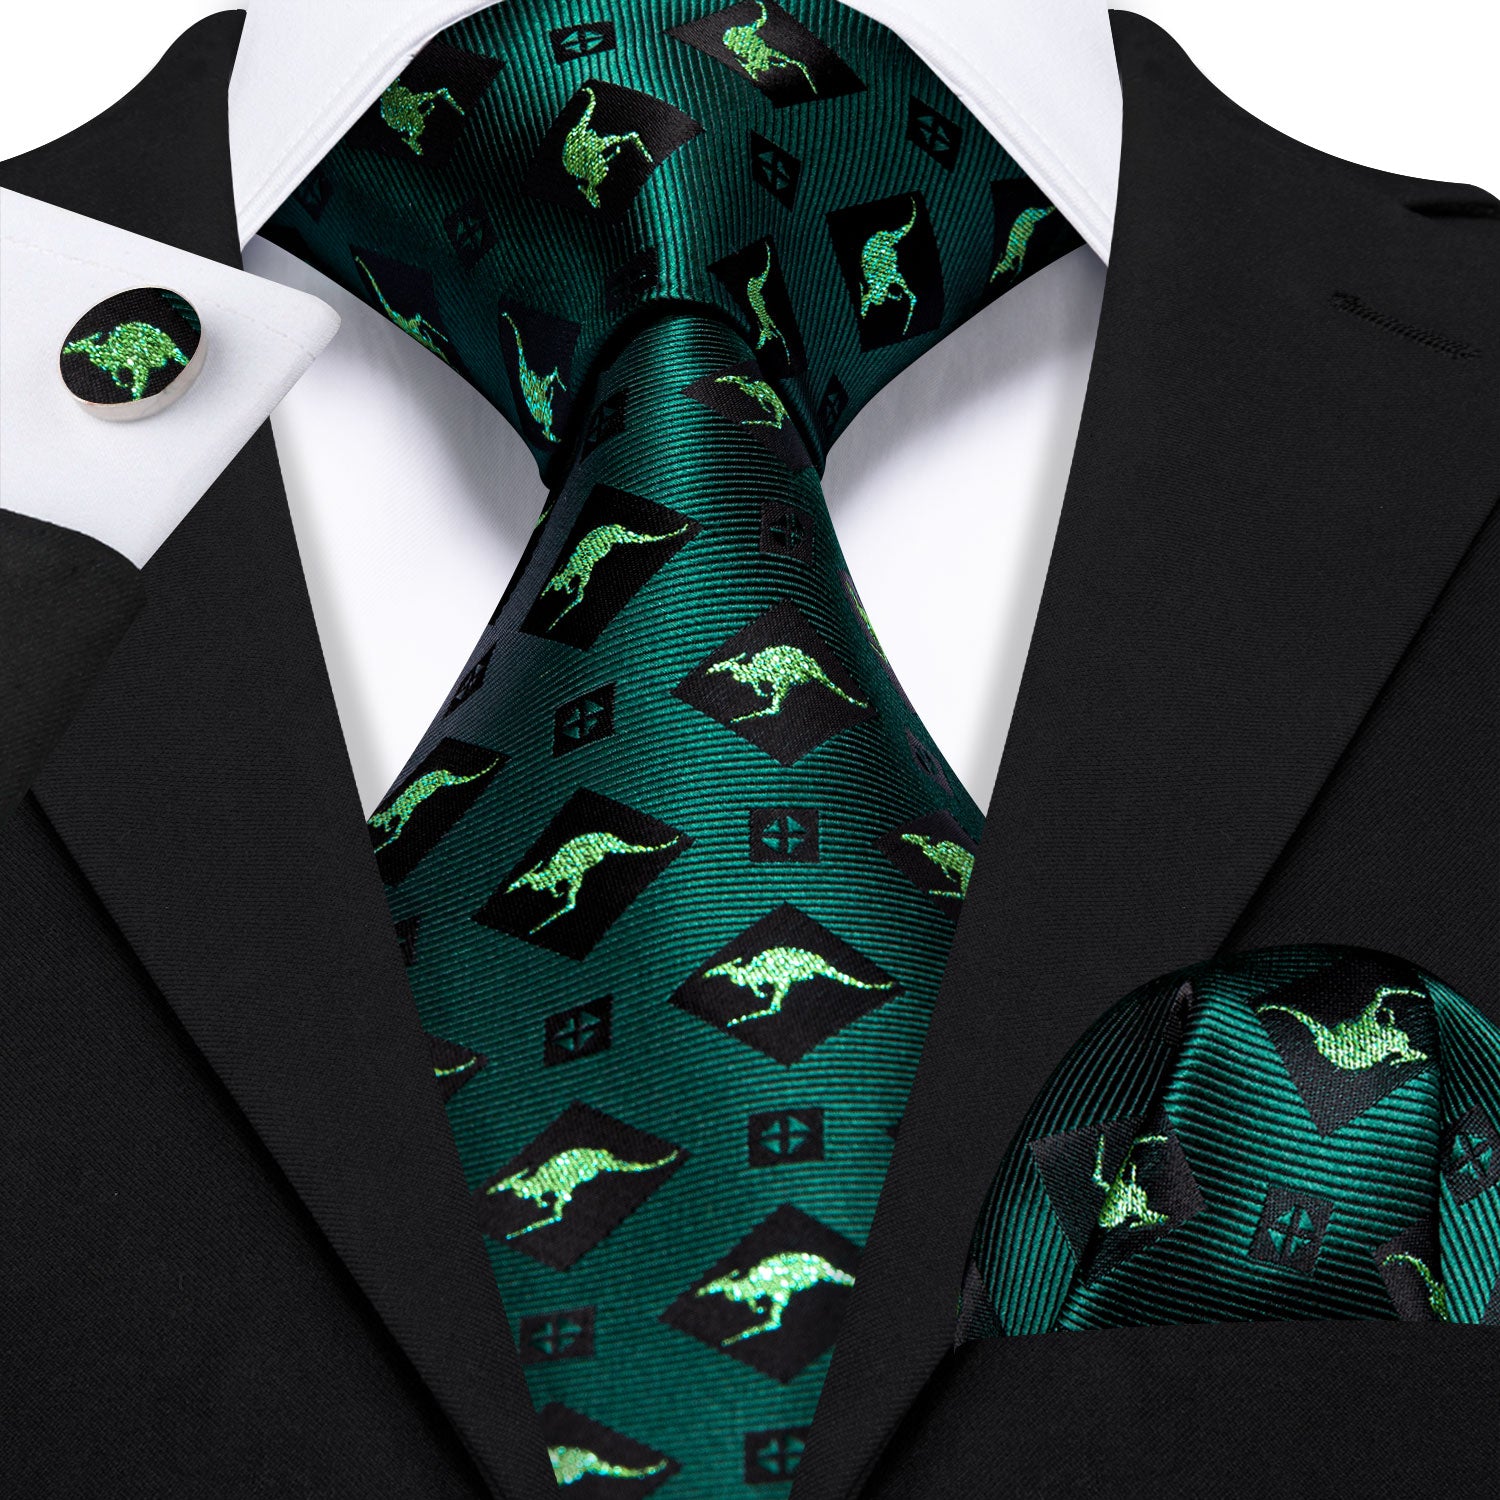 Barry.wang Green Tie Black Kangaroo Floral Silk Men's Tie Hanky Cufflinks Set